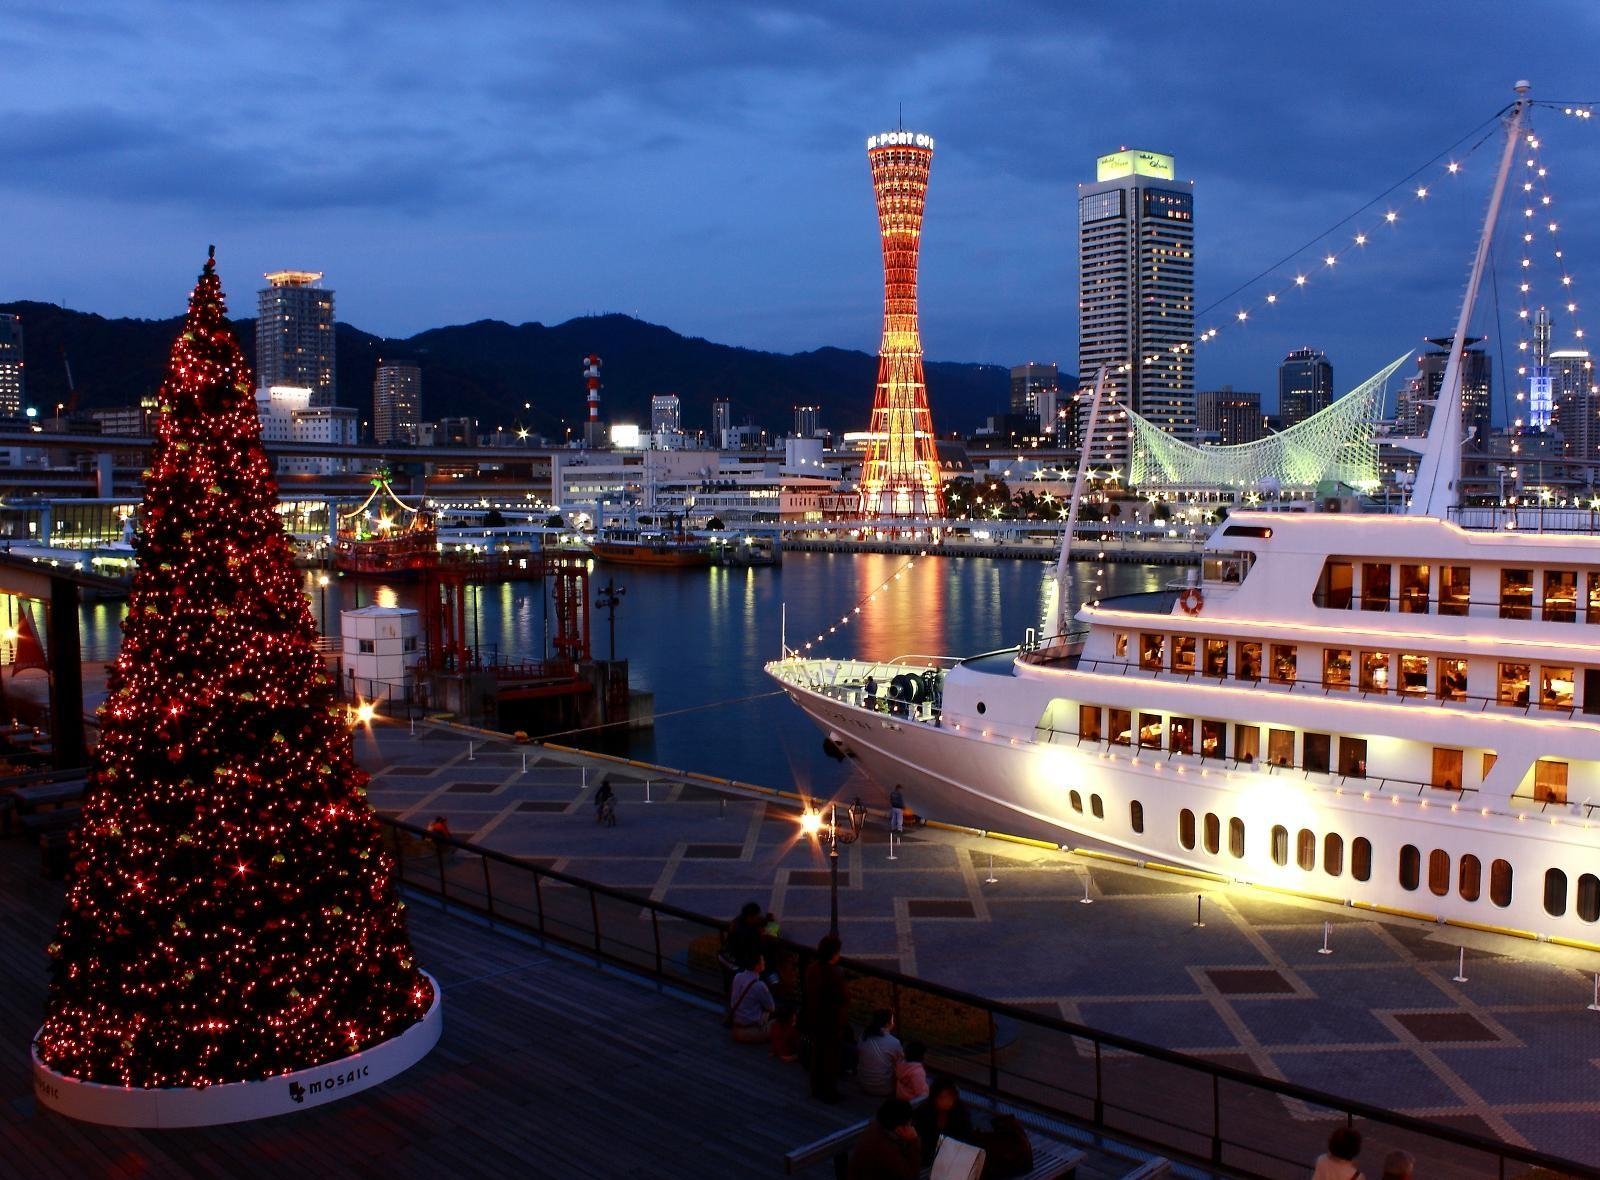 holidays, lights, holiday, evening, christmas tree, ship, port